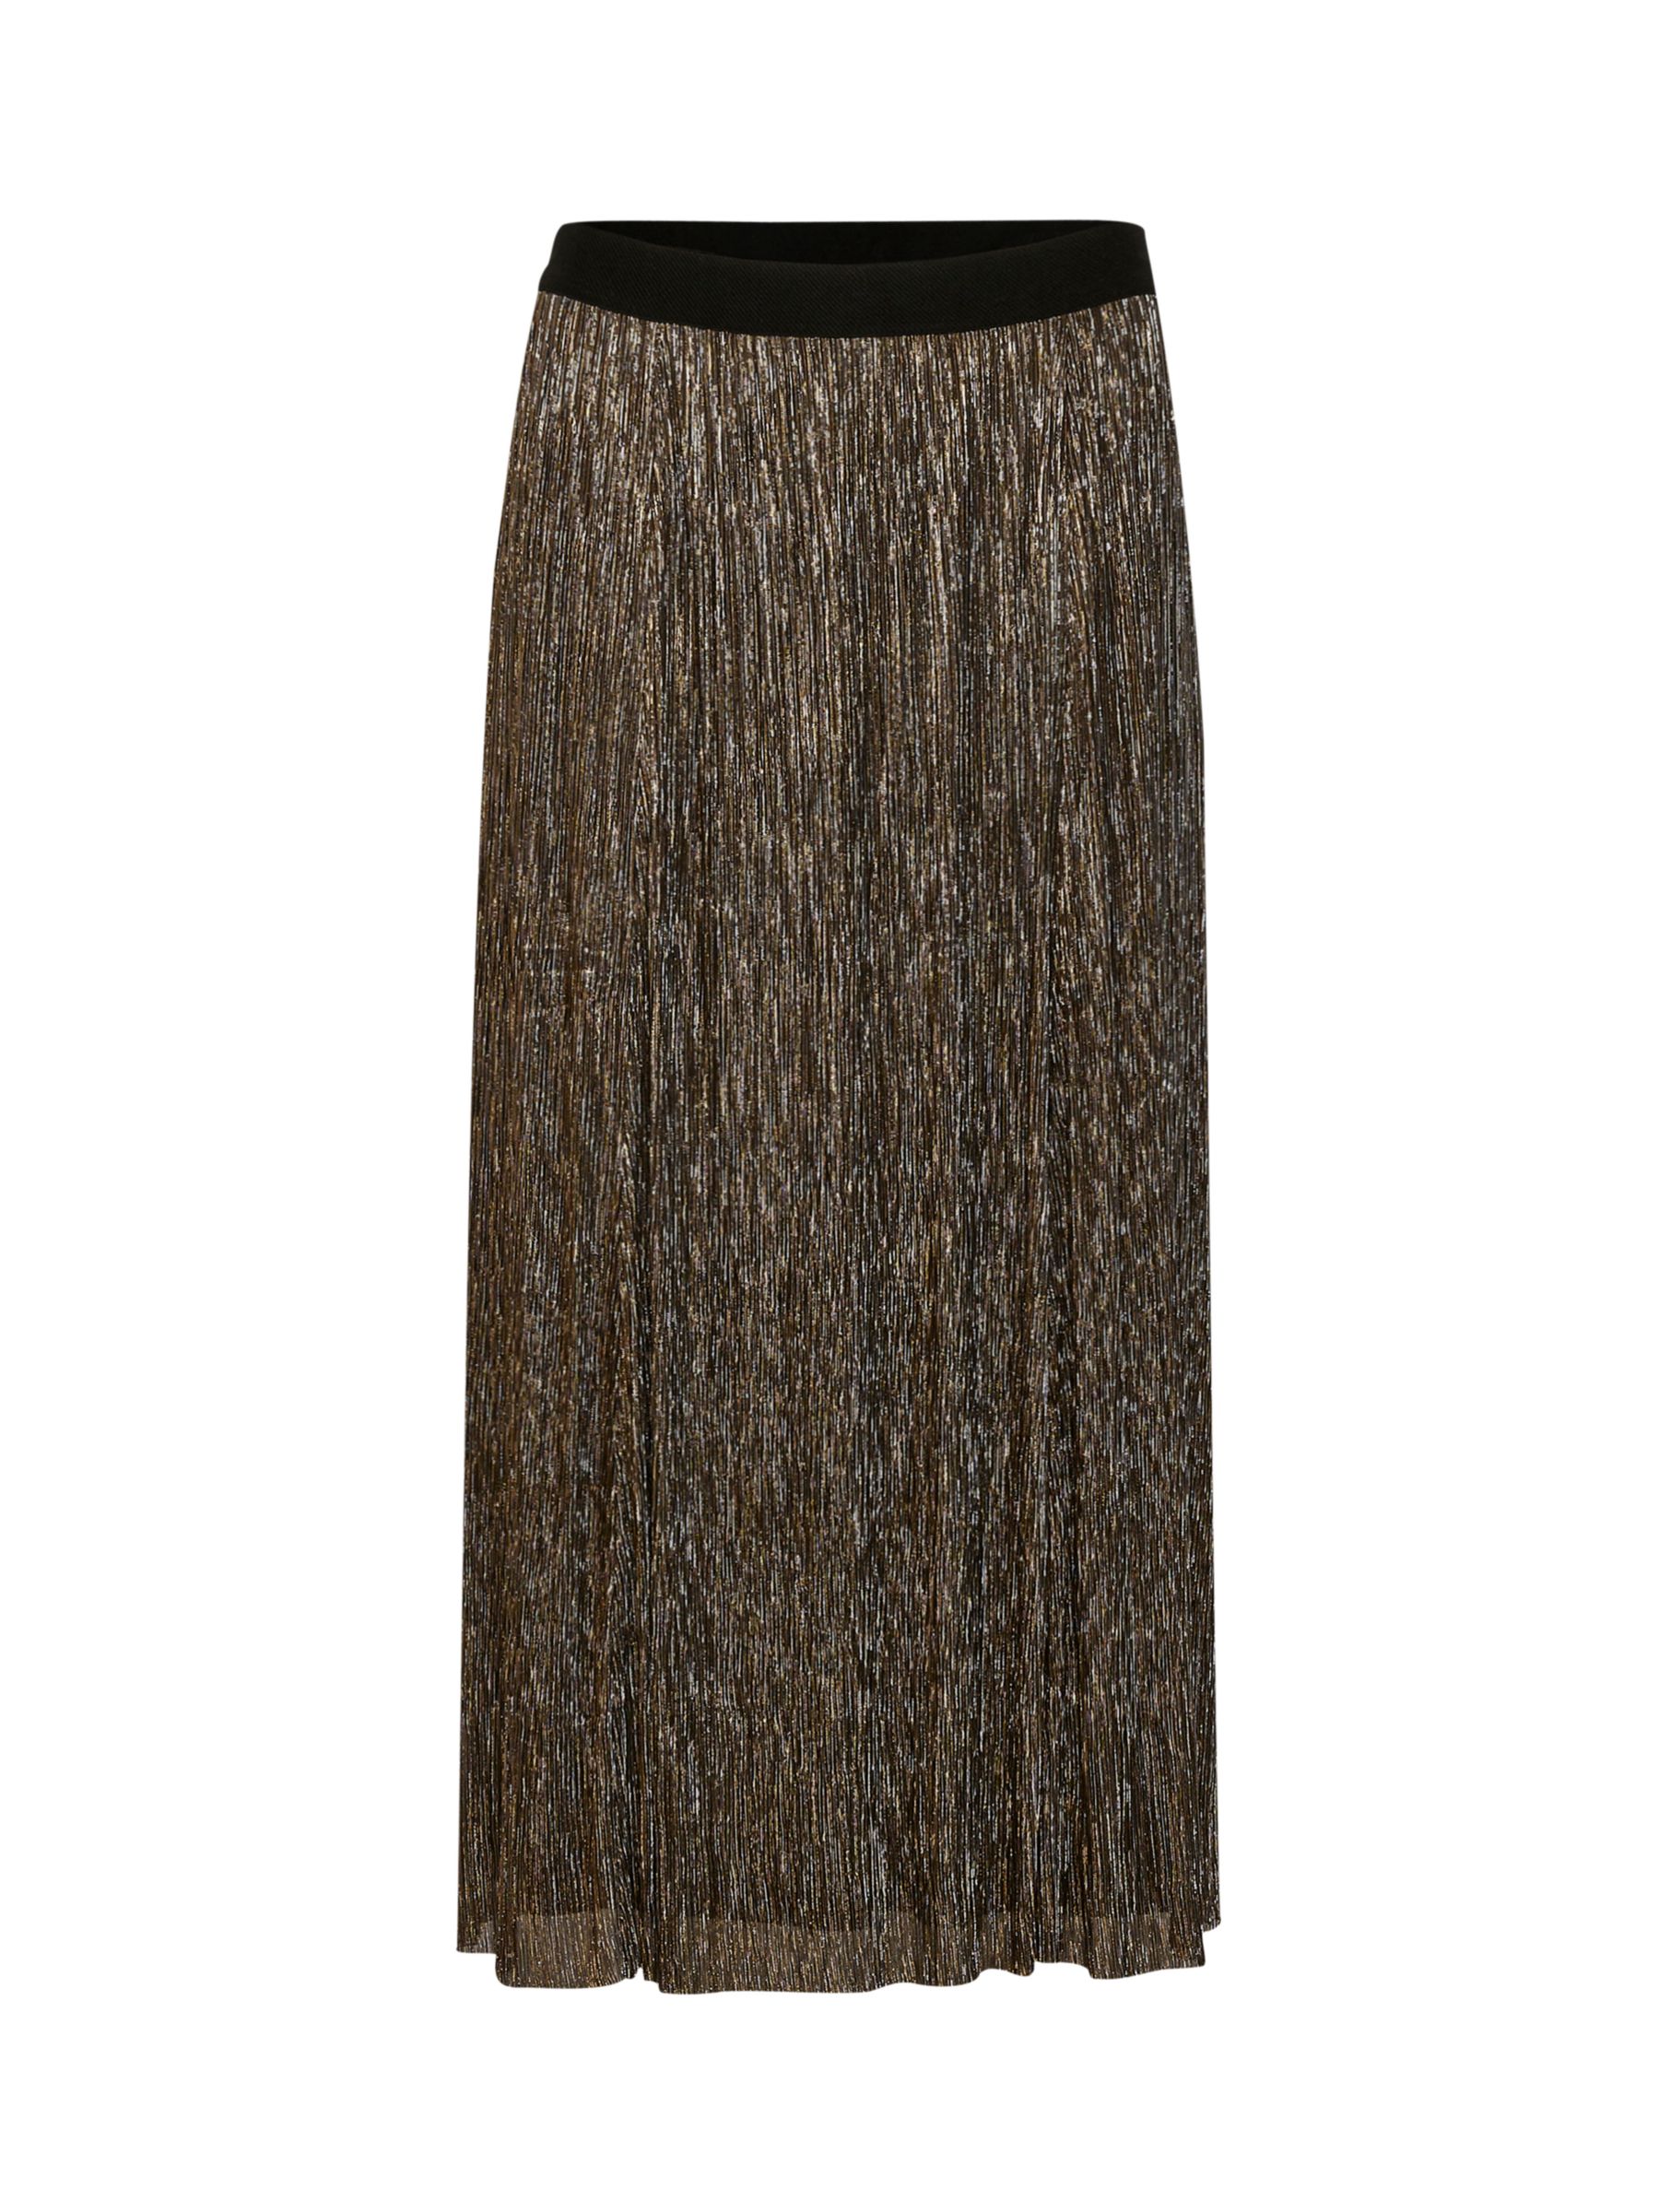 Part Two Cipo Metallic Midi Skirt, Black/Gold at John Lewis & Partners